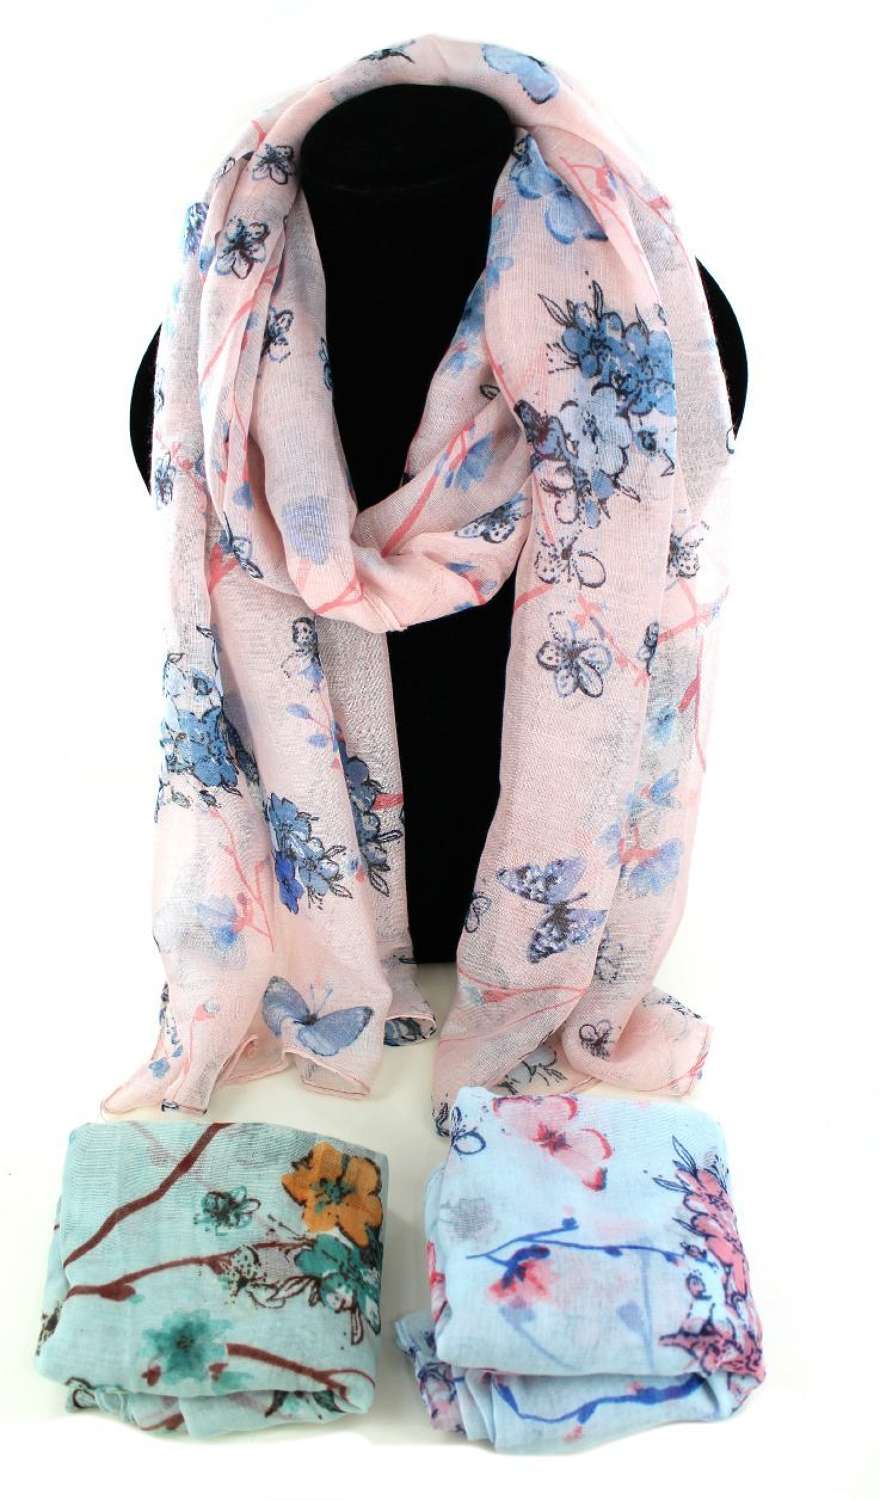 Floral print pastel coloured scarf.